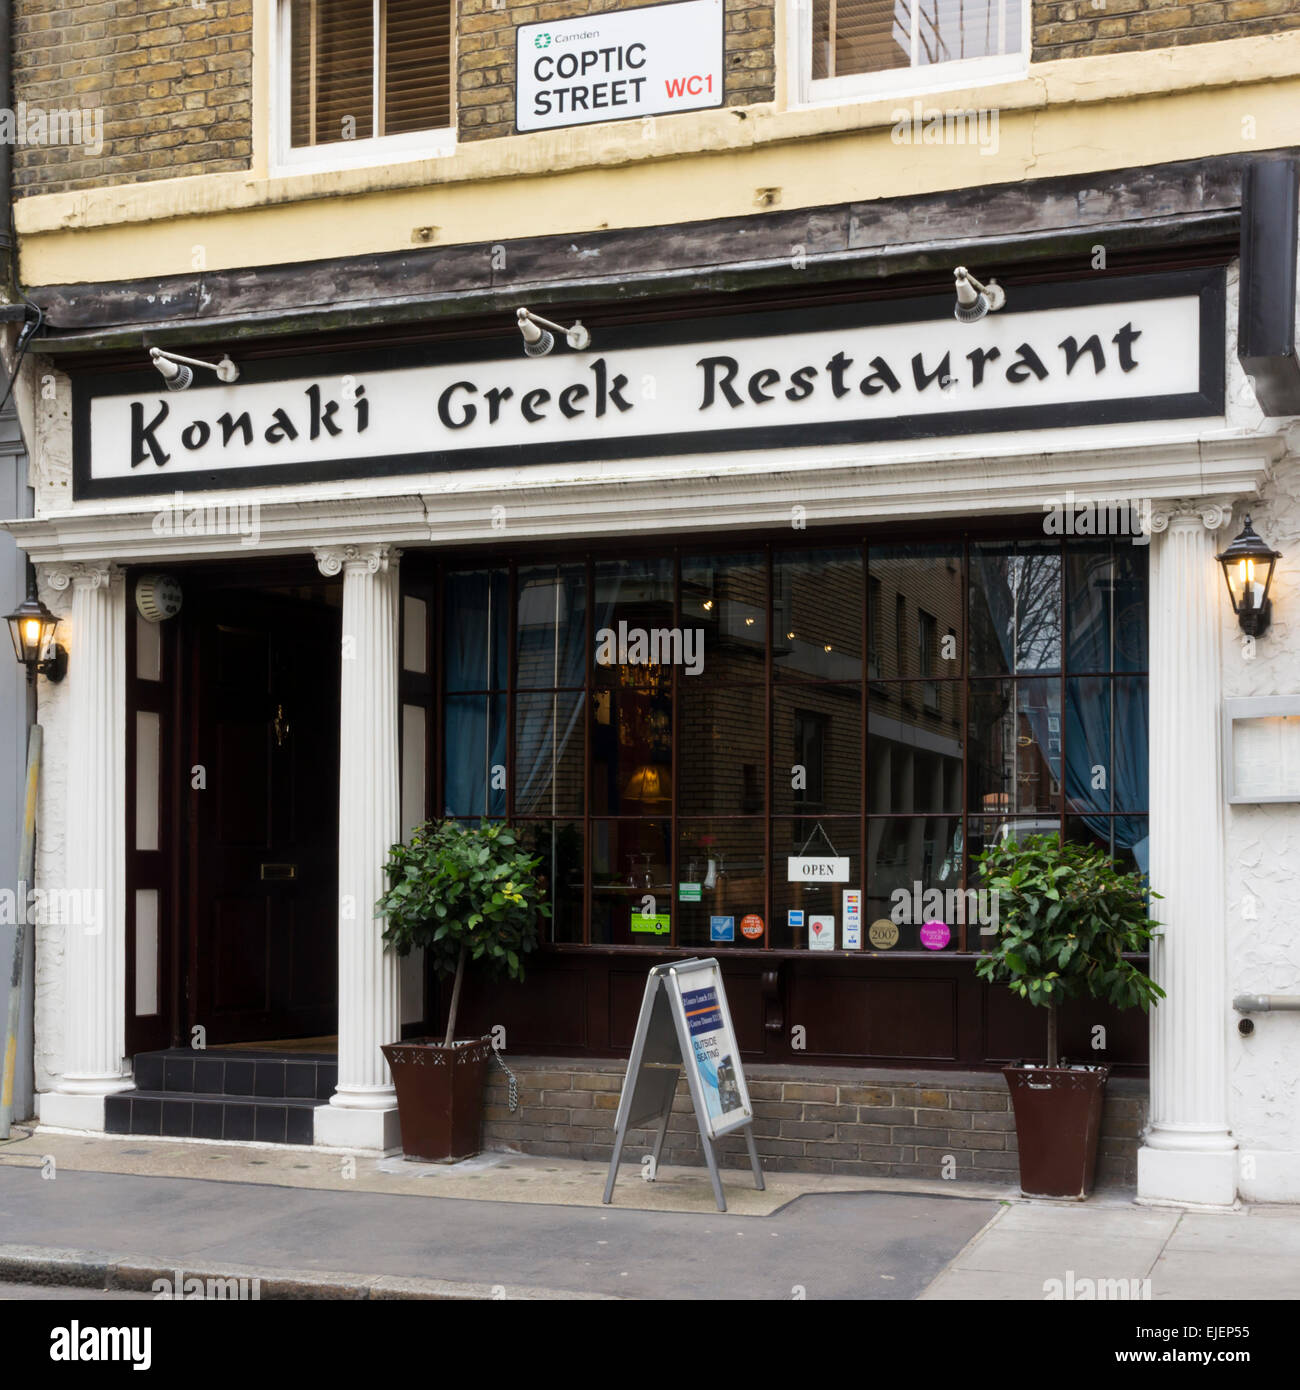 Konaki Greek Restaurant in Coptic Street, Londres. Banque D'Images